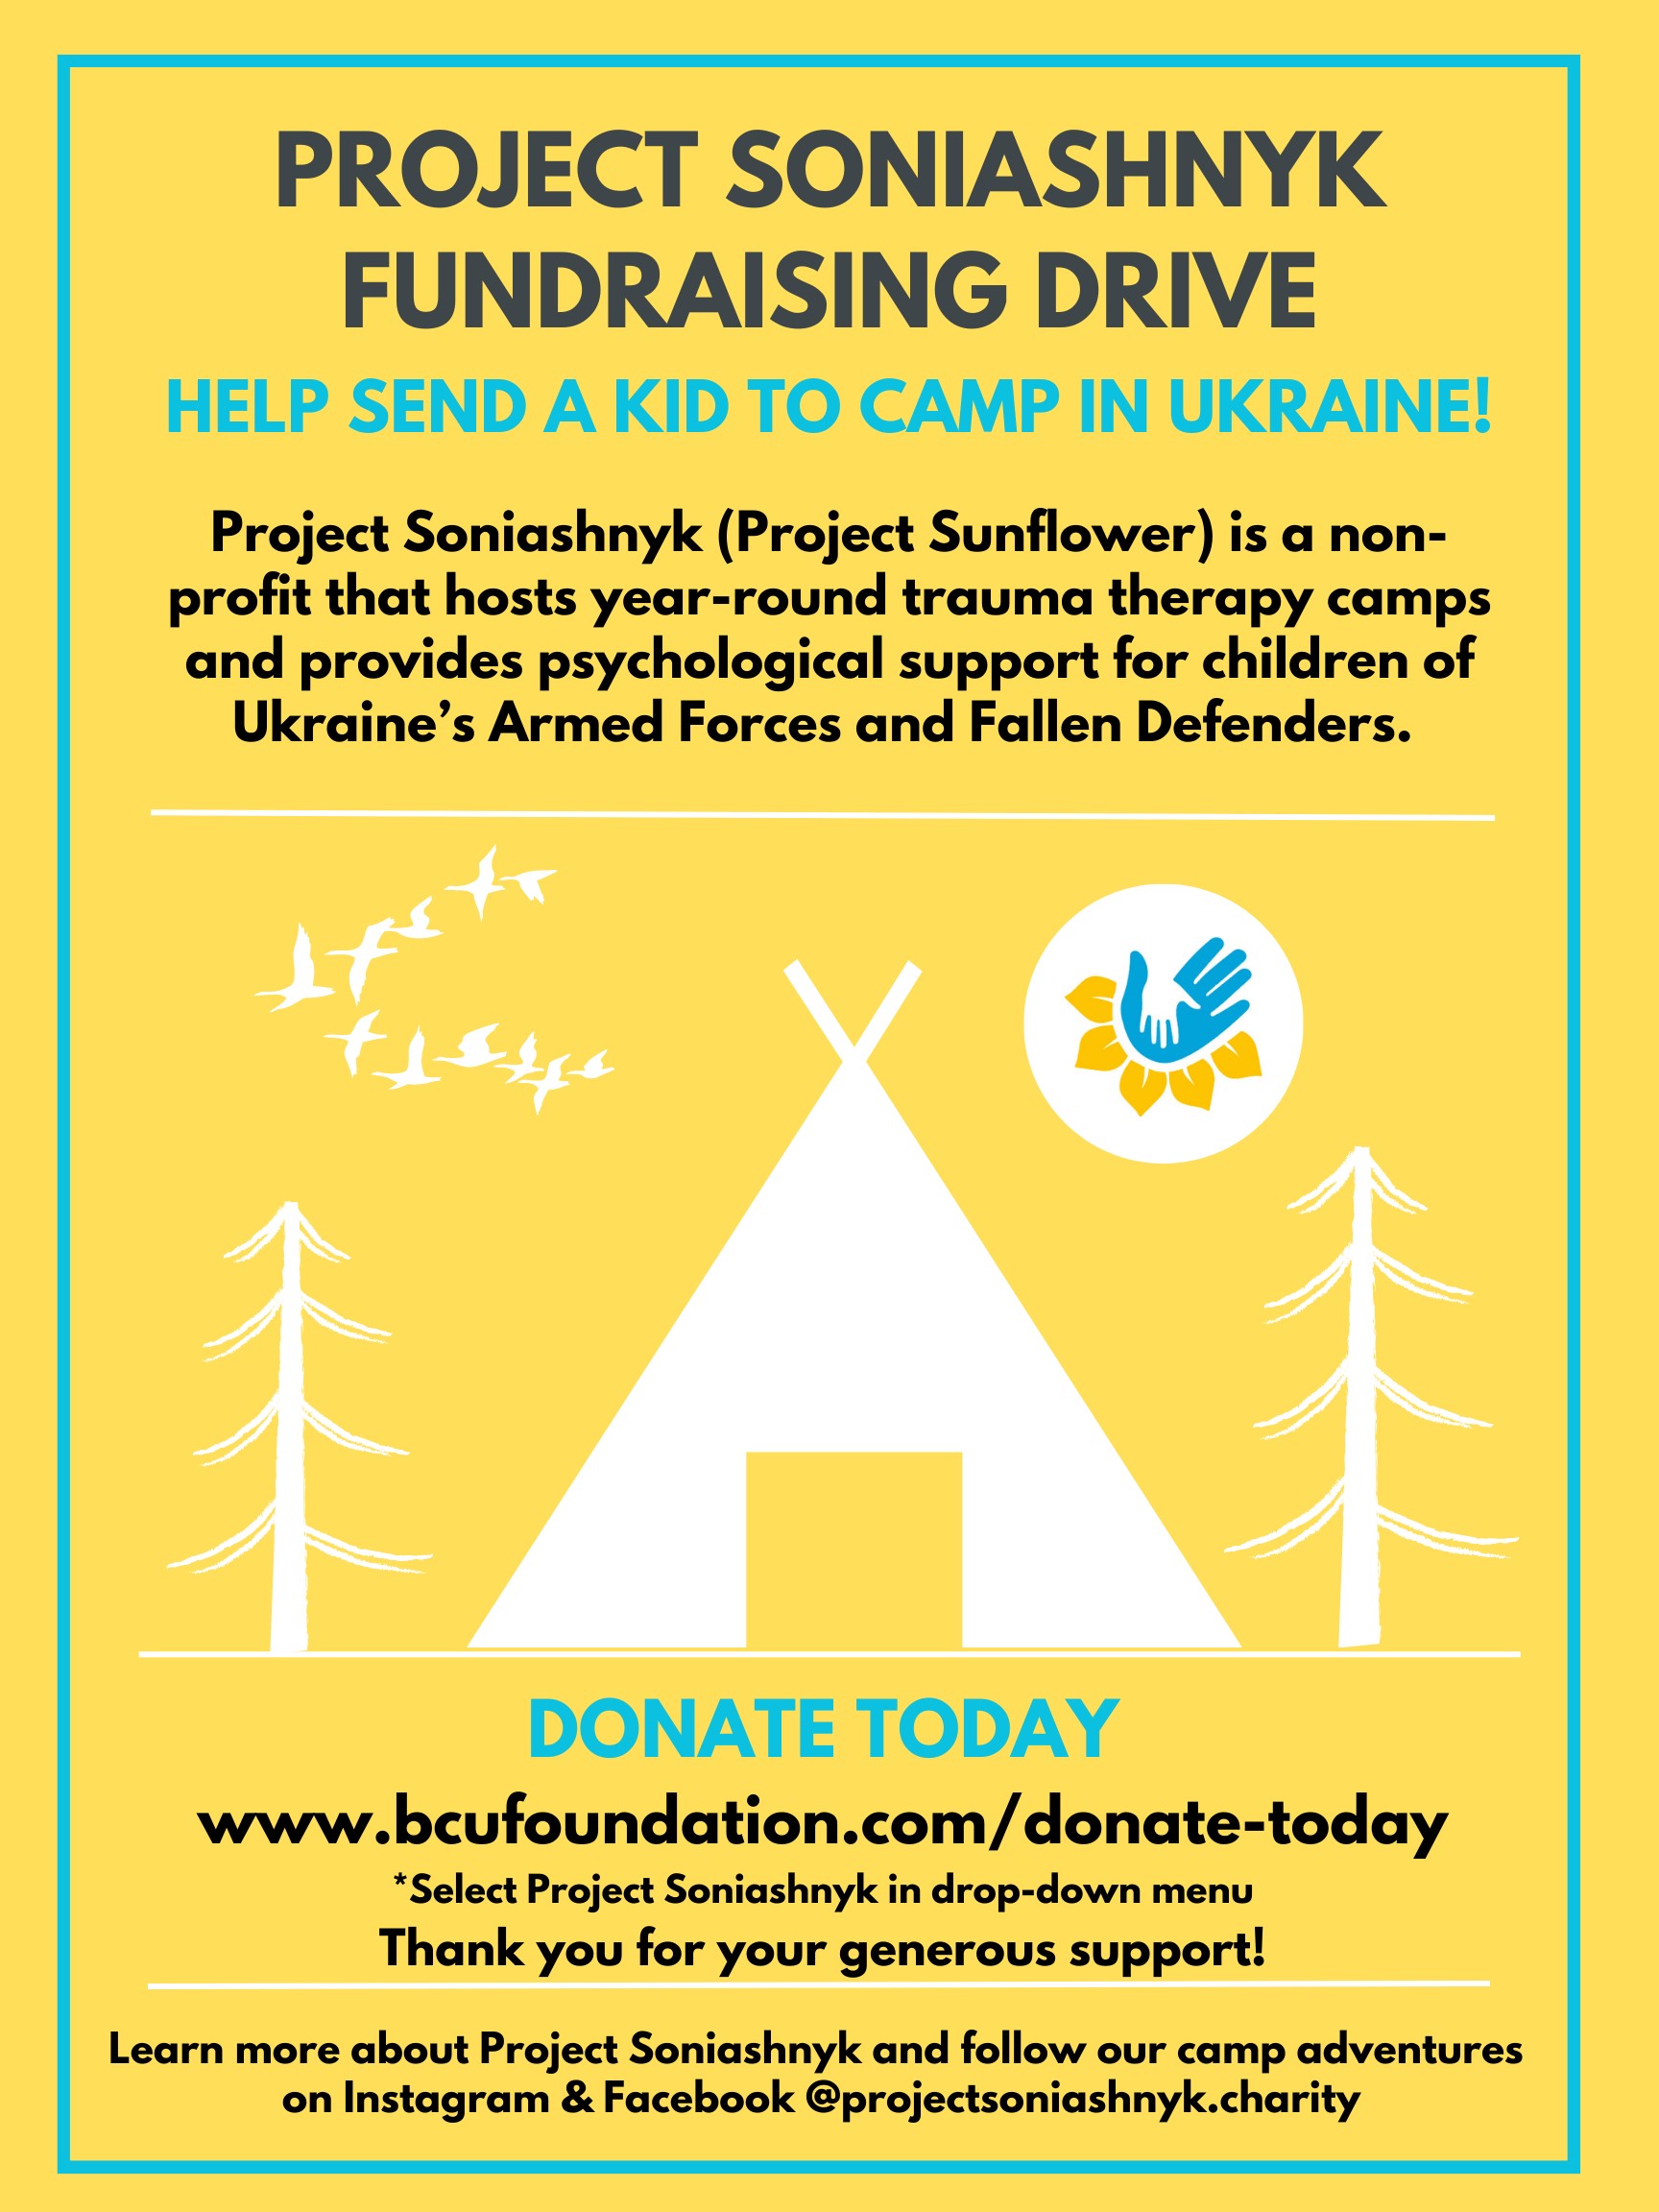 Project Soniashnyk - Donate